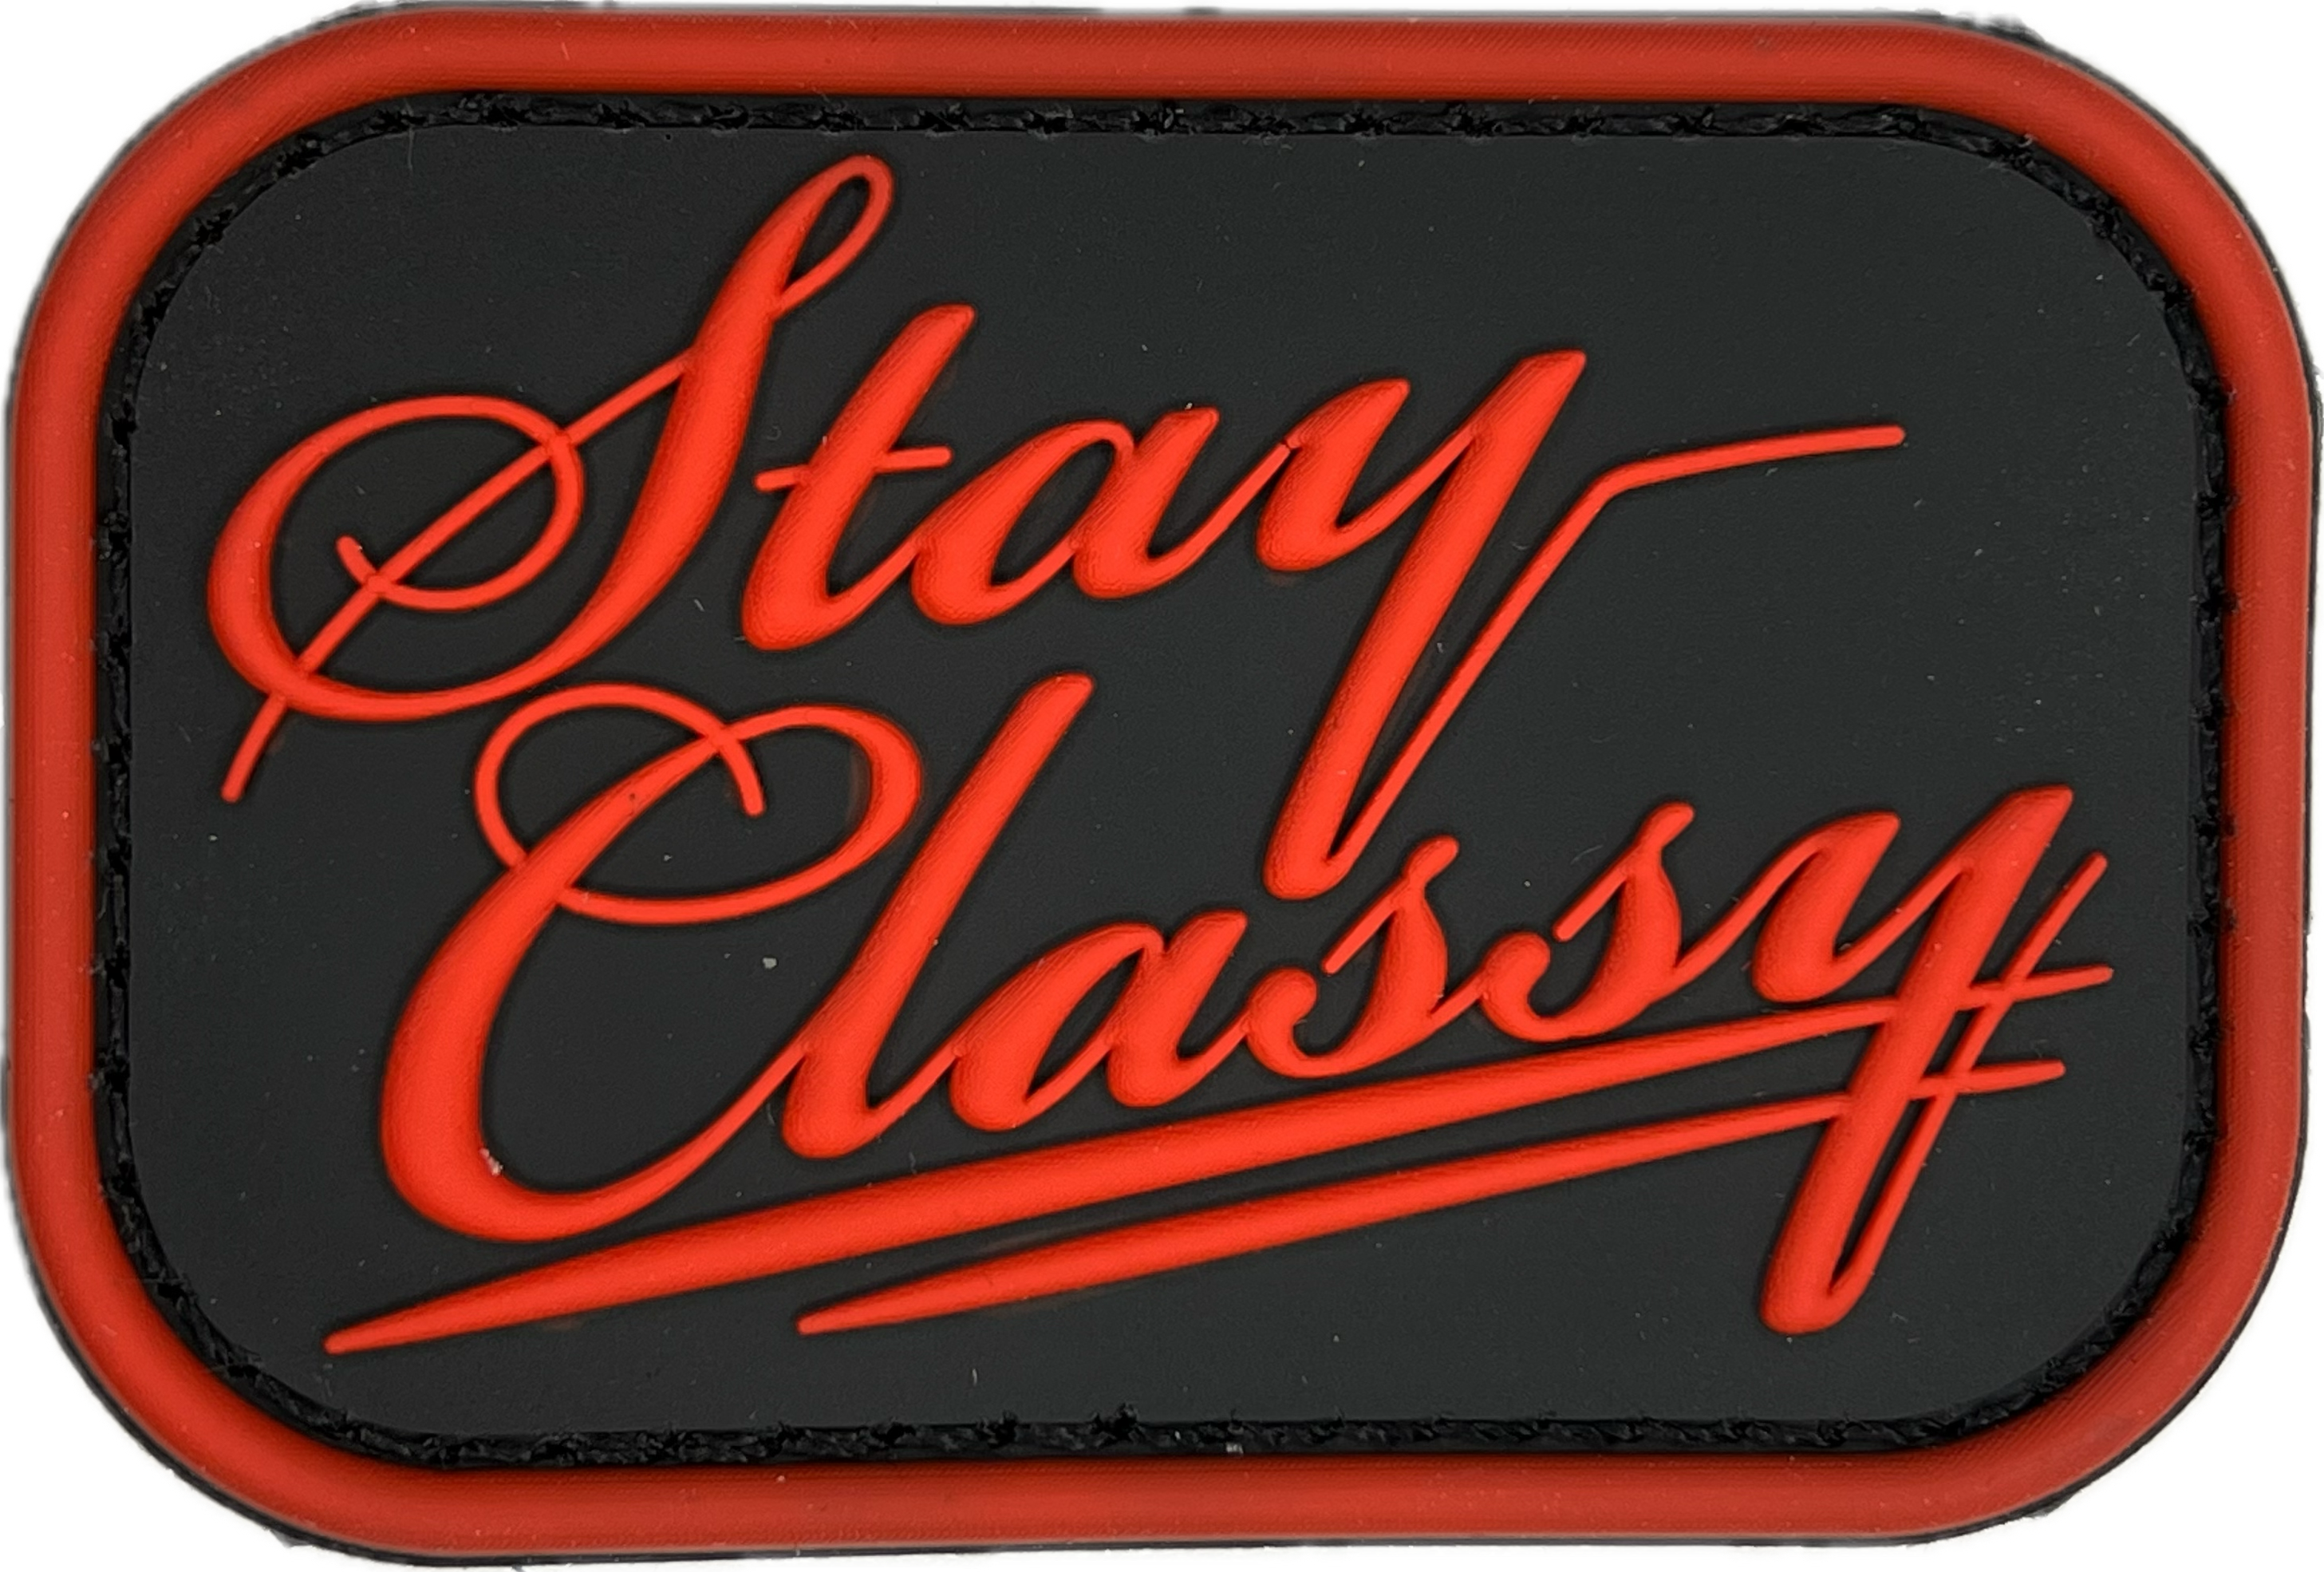 Stay Classy - PVC